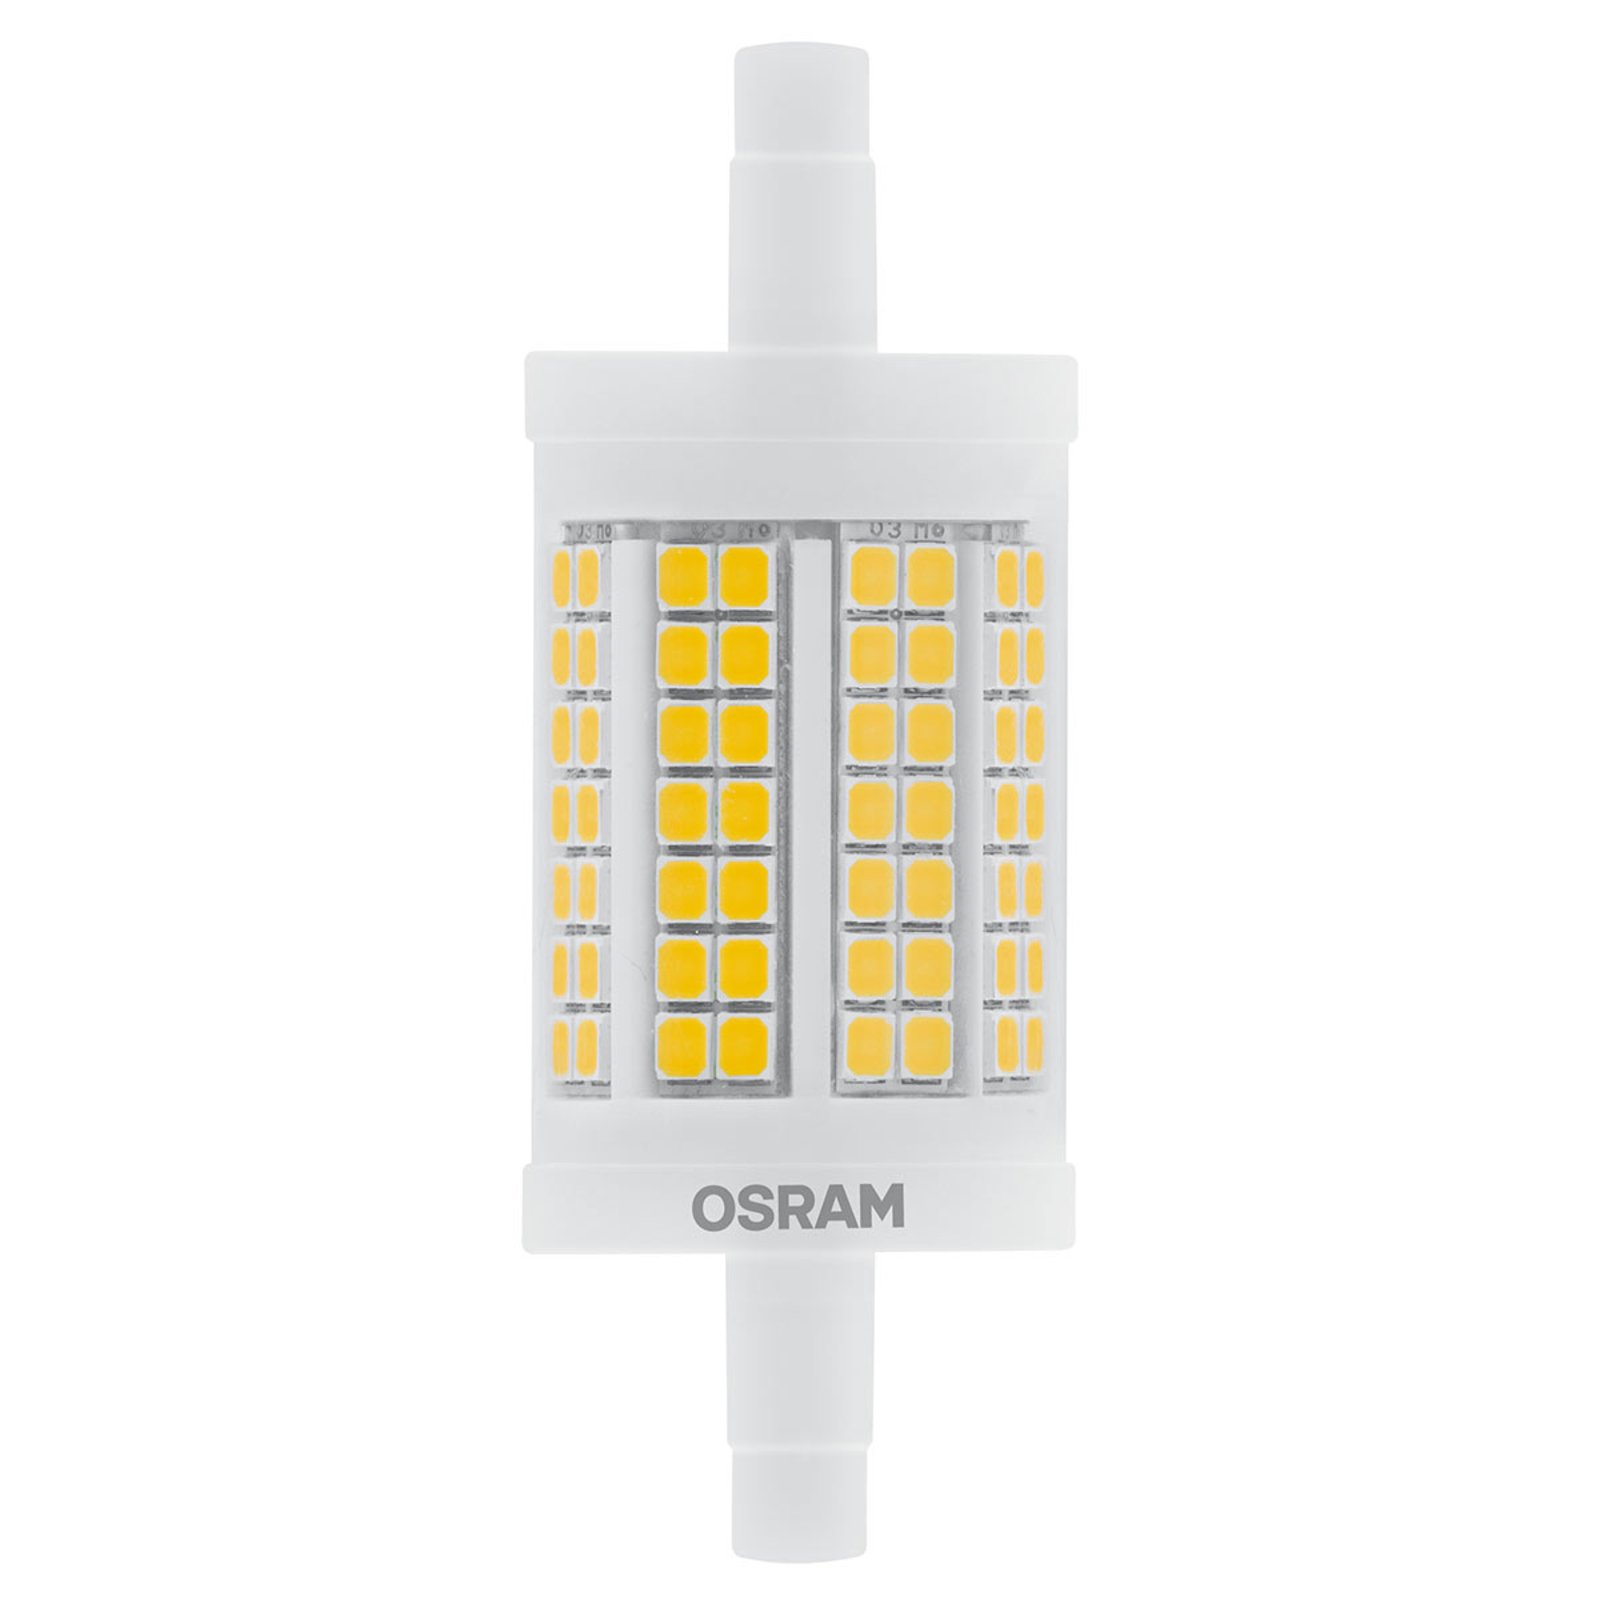 OSRAM LED-stav R7s 11,5W varmvit, 1 521 lm